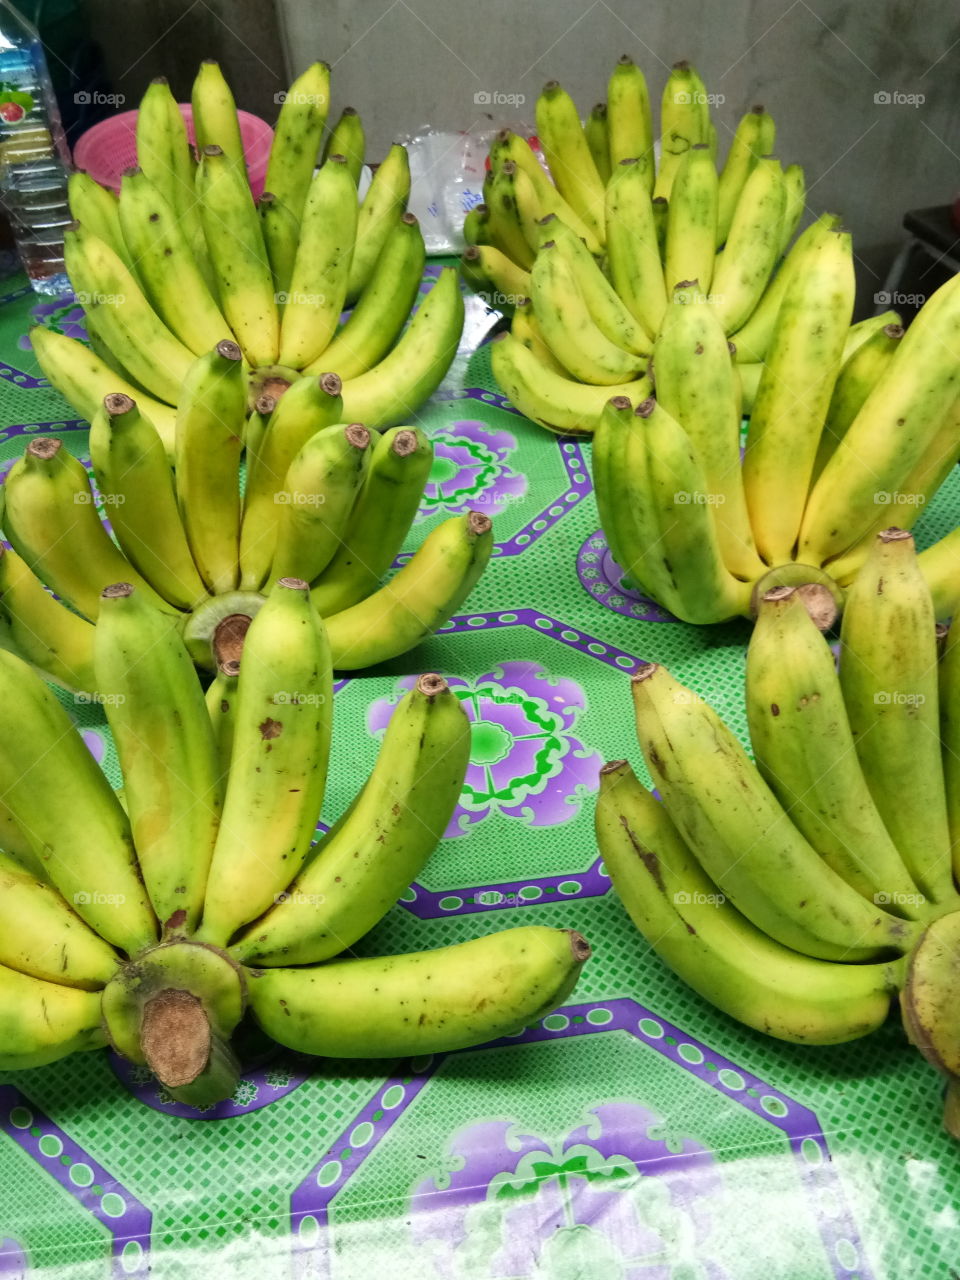 banana
fruit
health